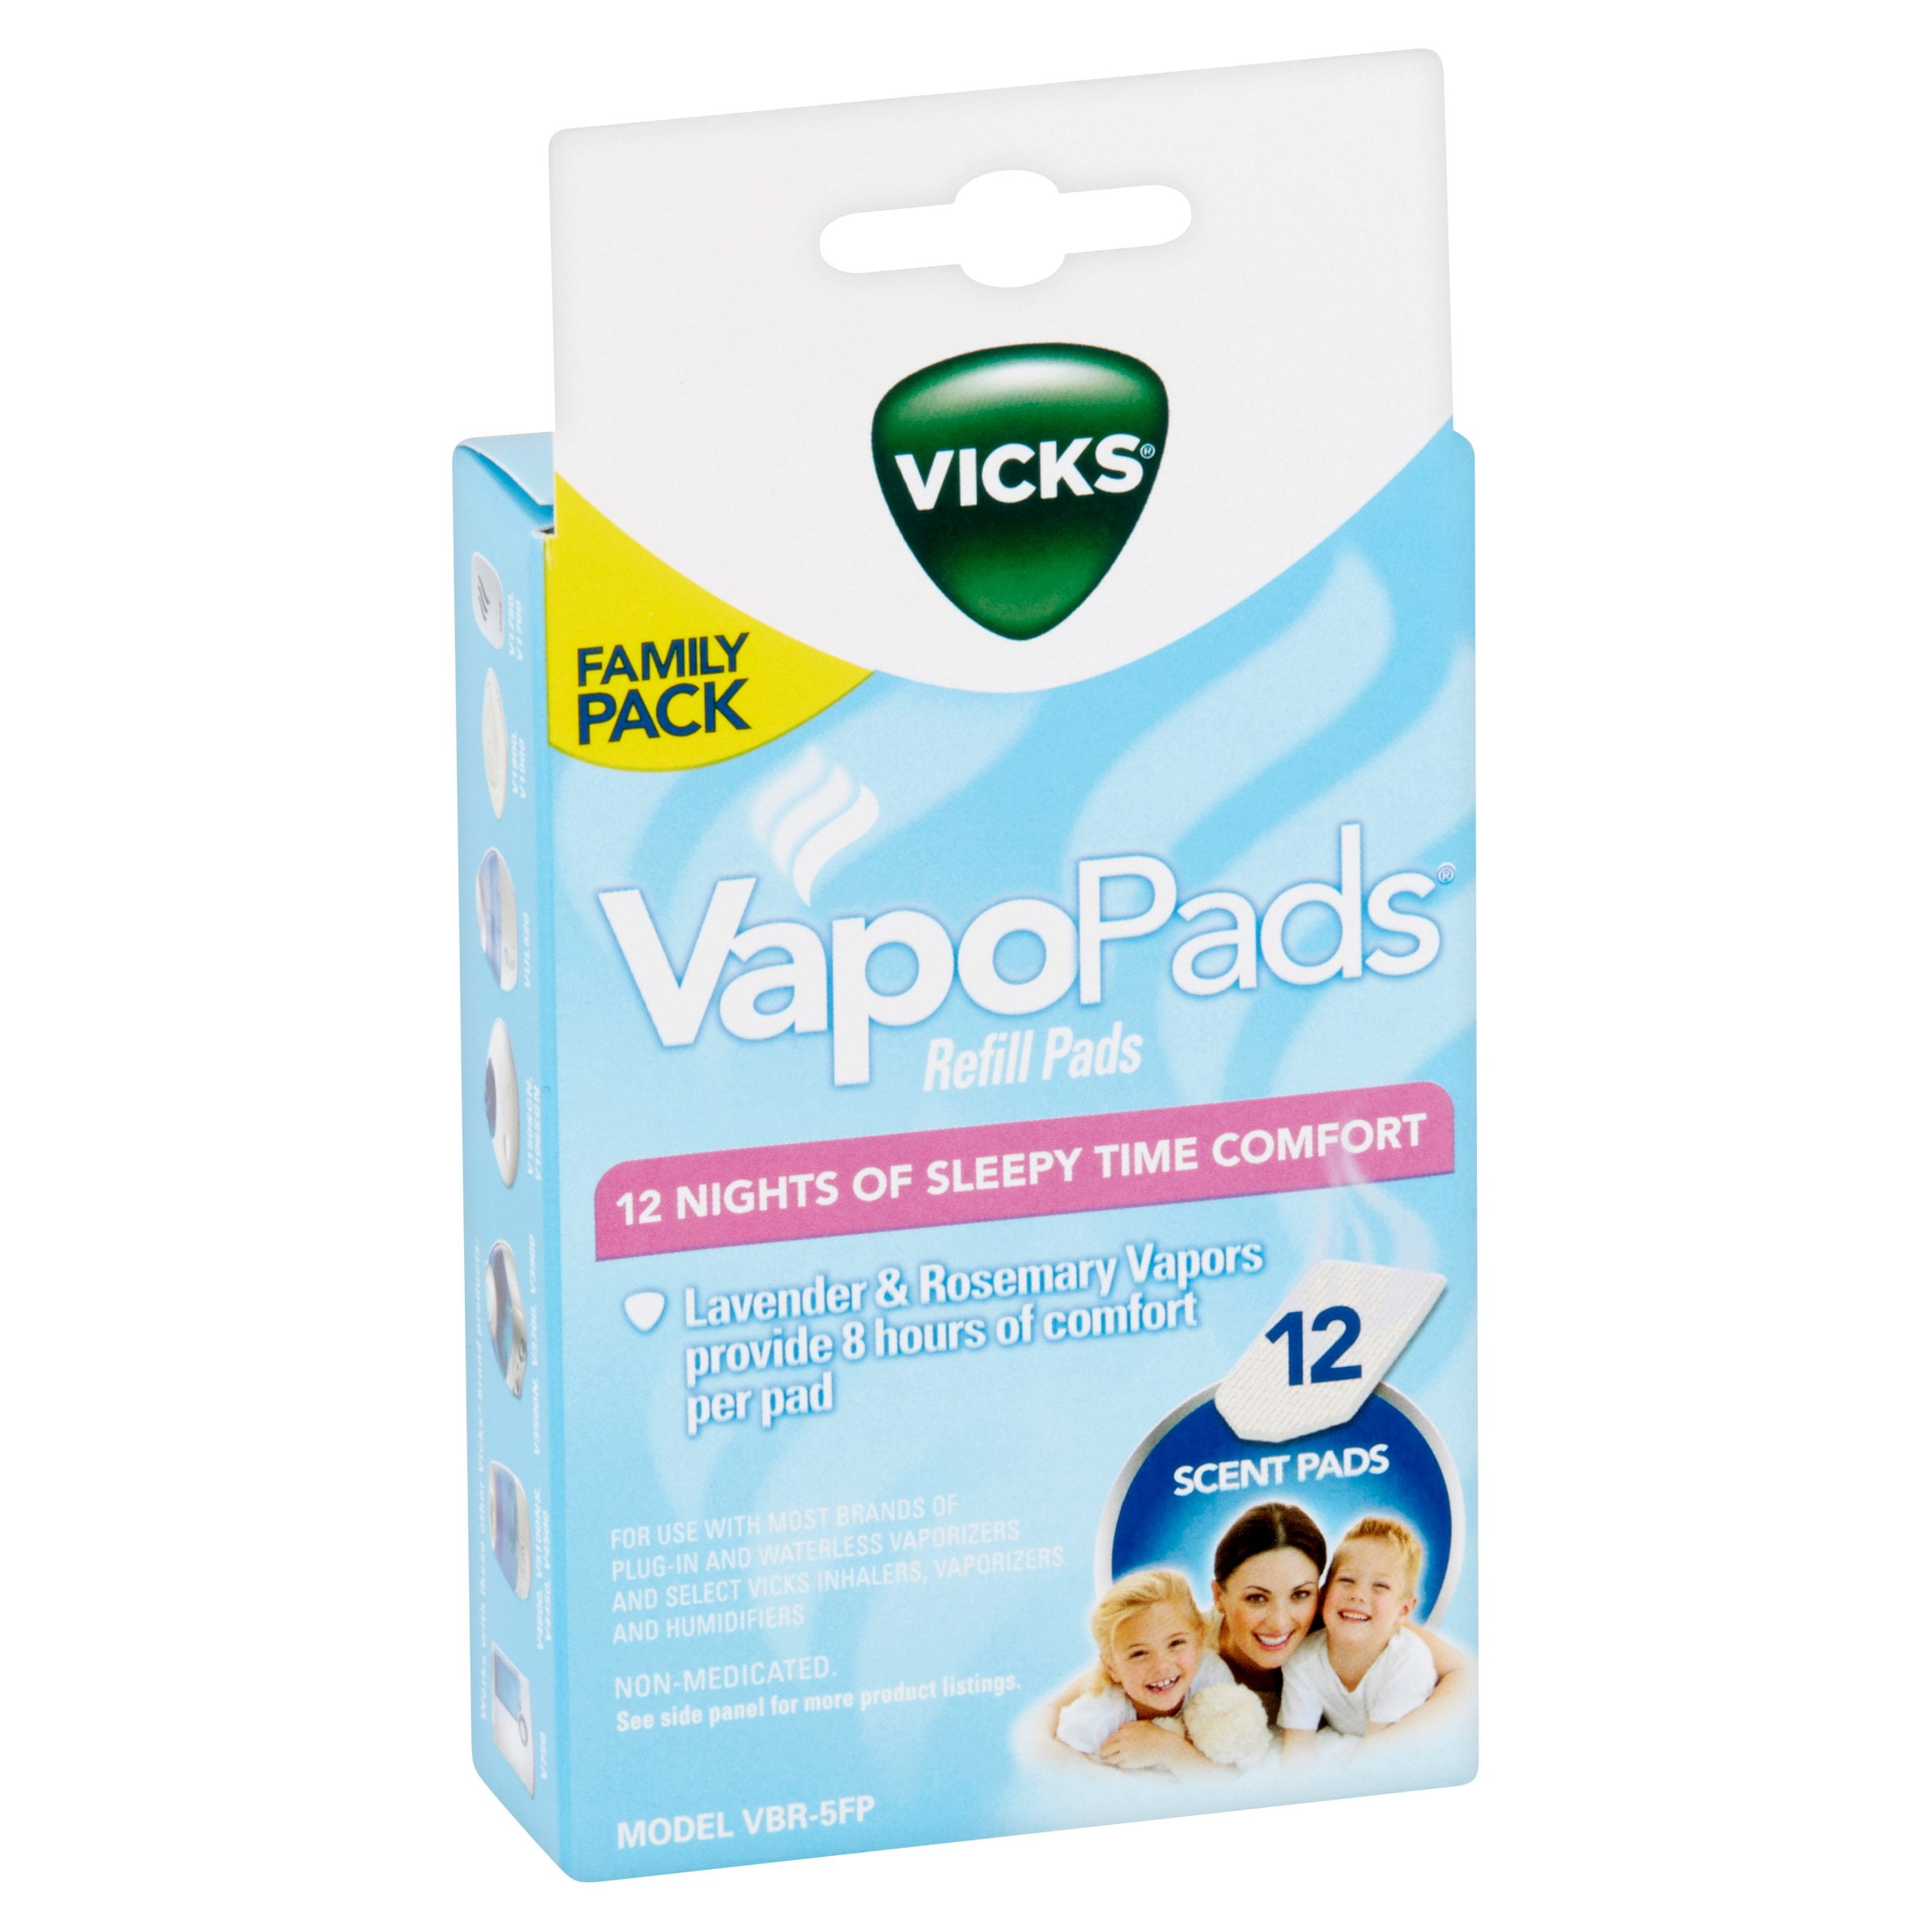 VICKS Multipack 2 Packs 12 ct VICKS VapoPads Refill Pads Family Pack Each